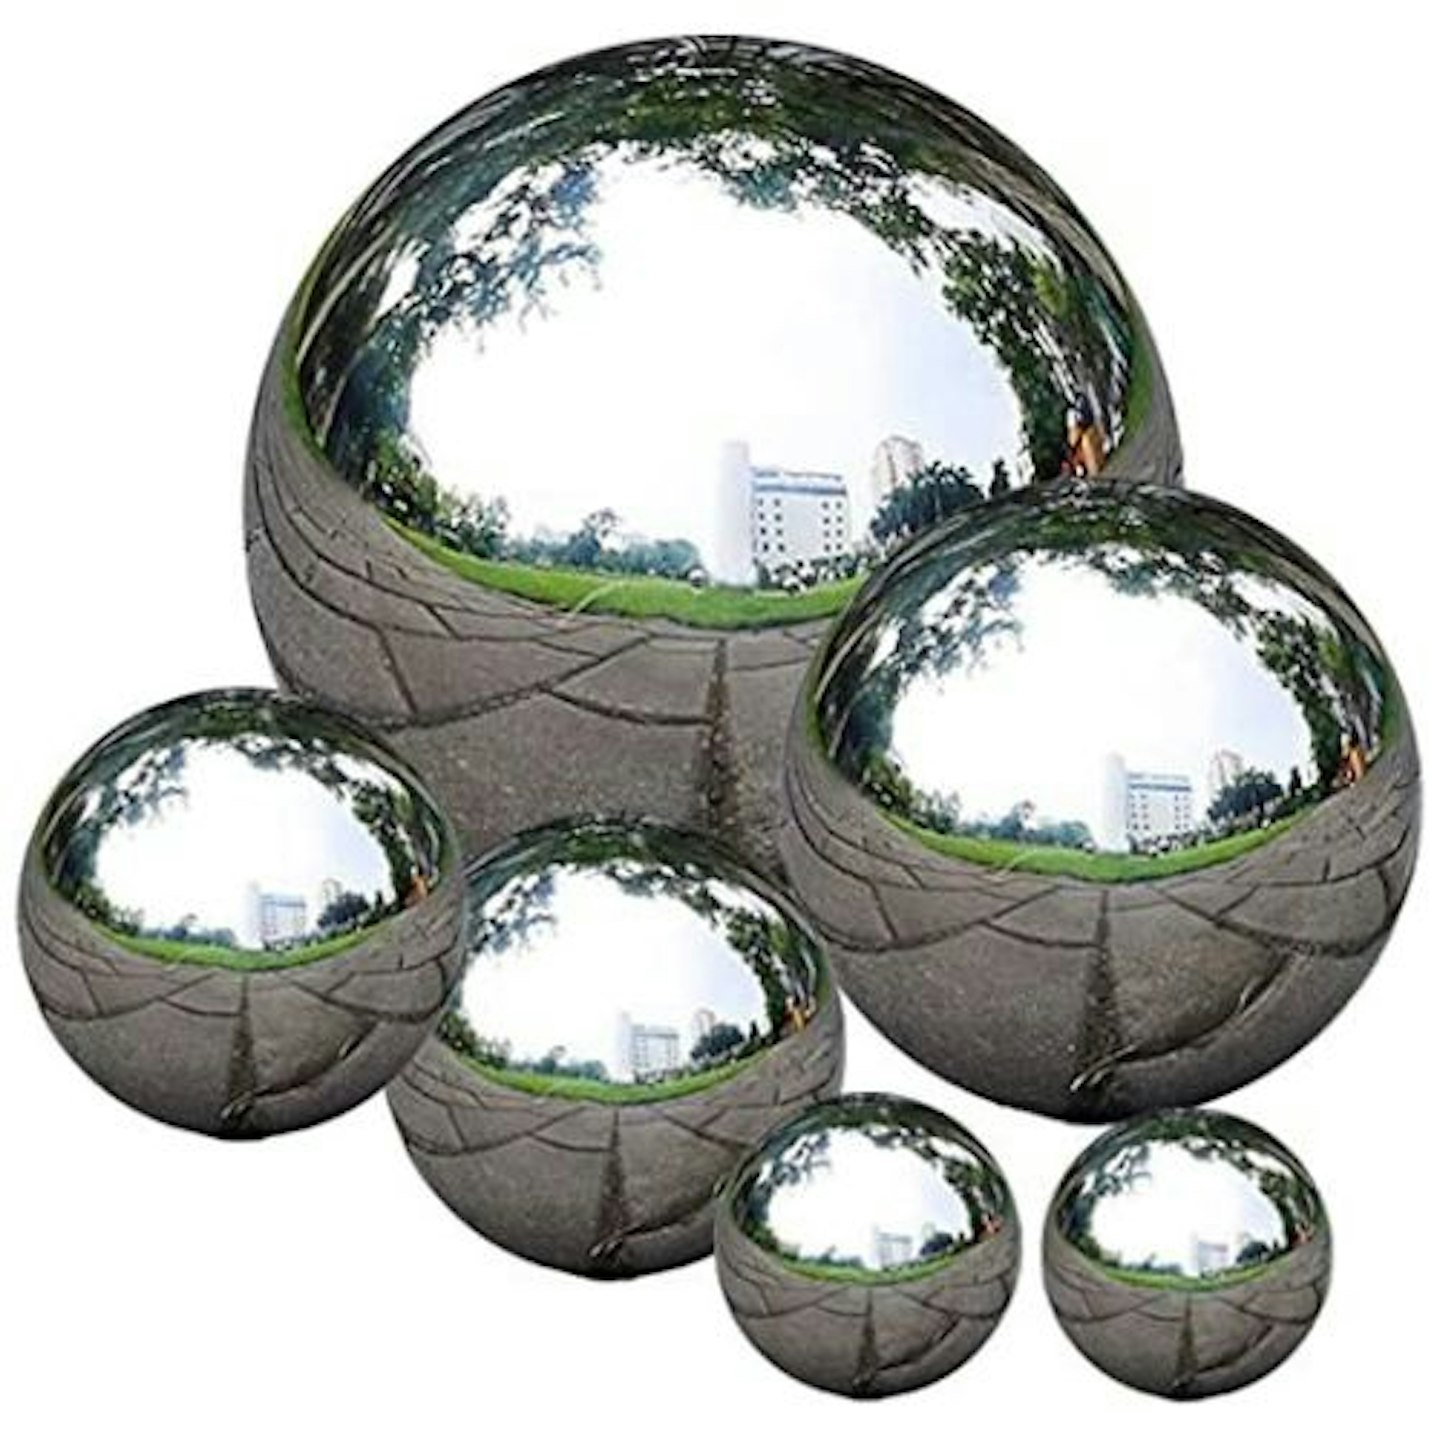 Stainless Steel Gazing Ball